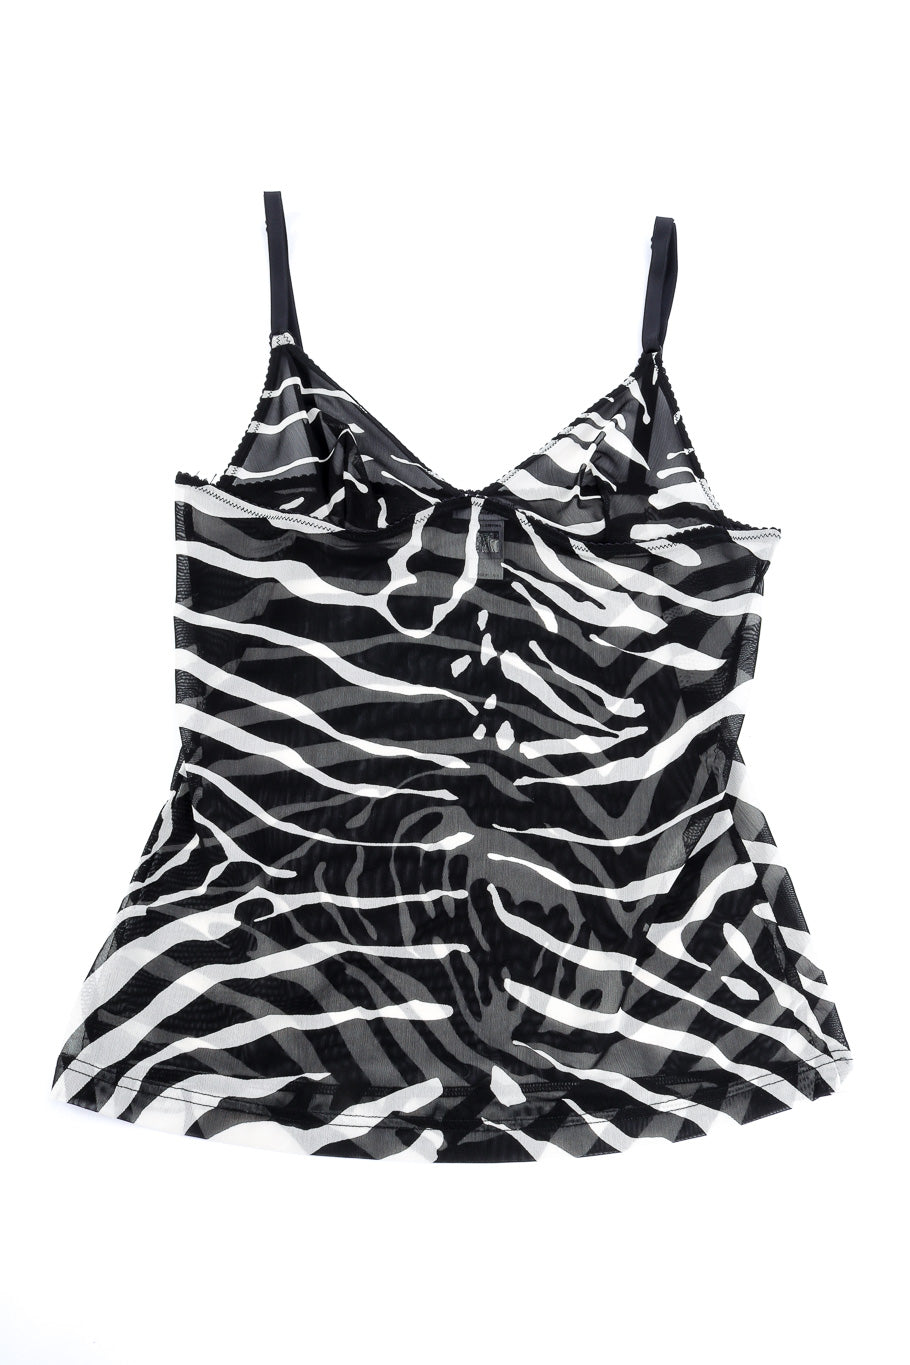 Dolce & Gabbana zebra print mesh camisole top flat-lay @recessla